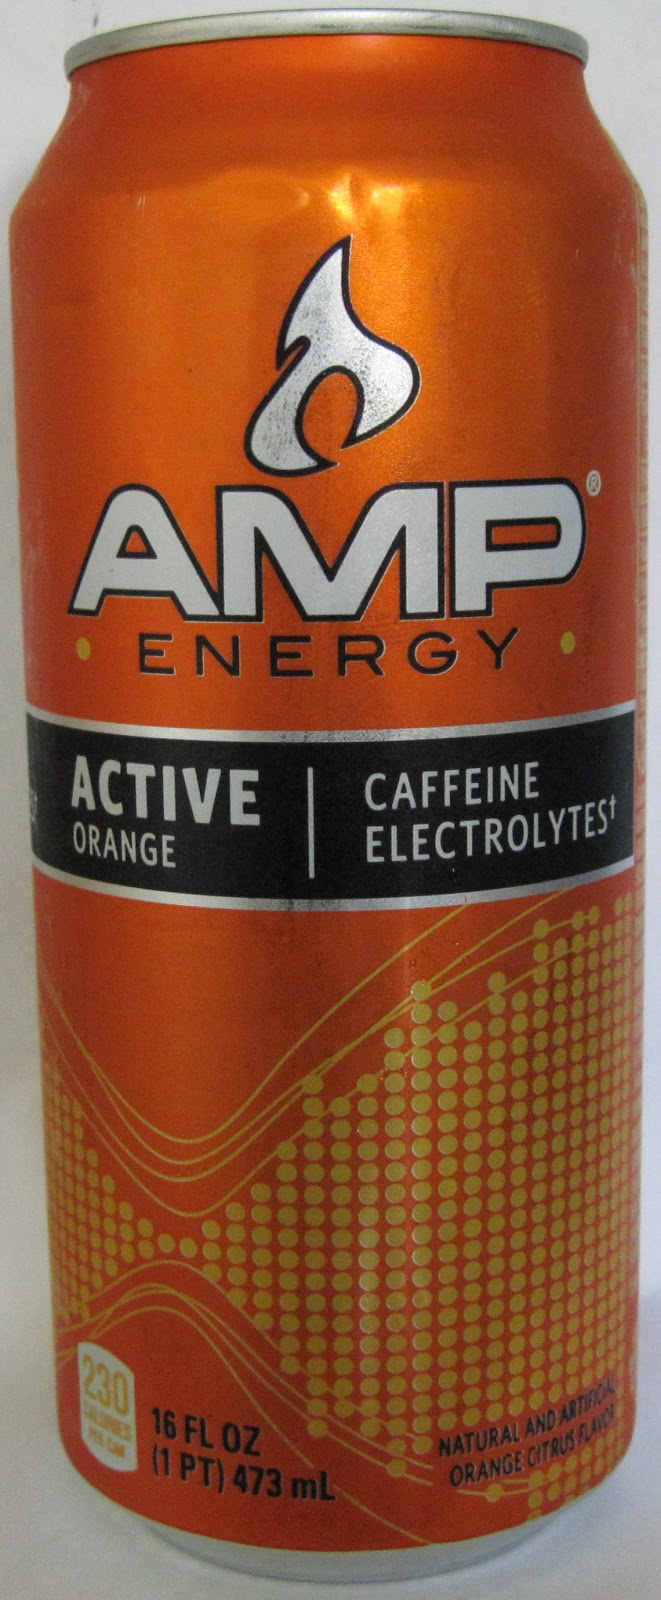 Caffeine King: AMP Active Orange Energy Drink Review